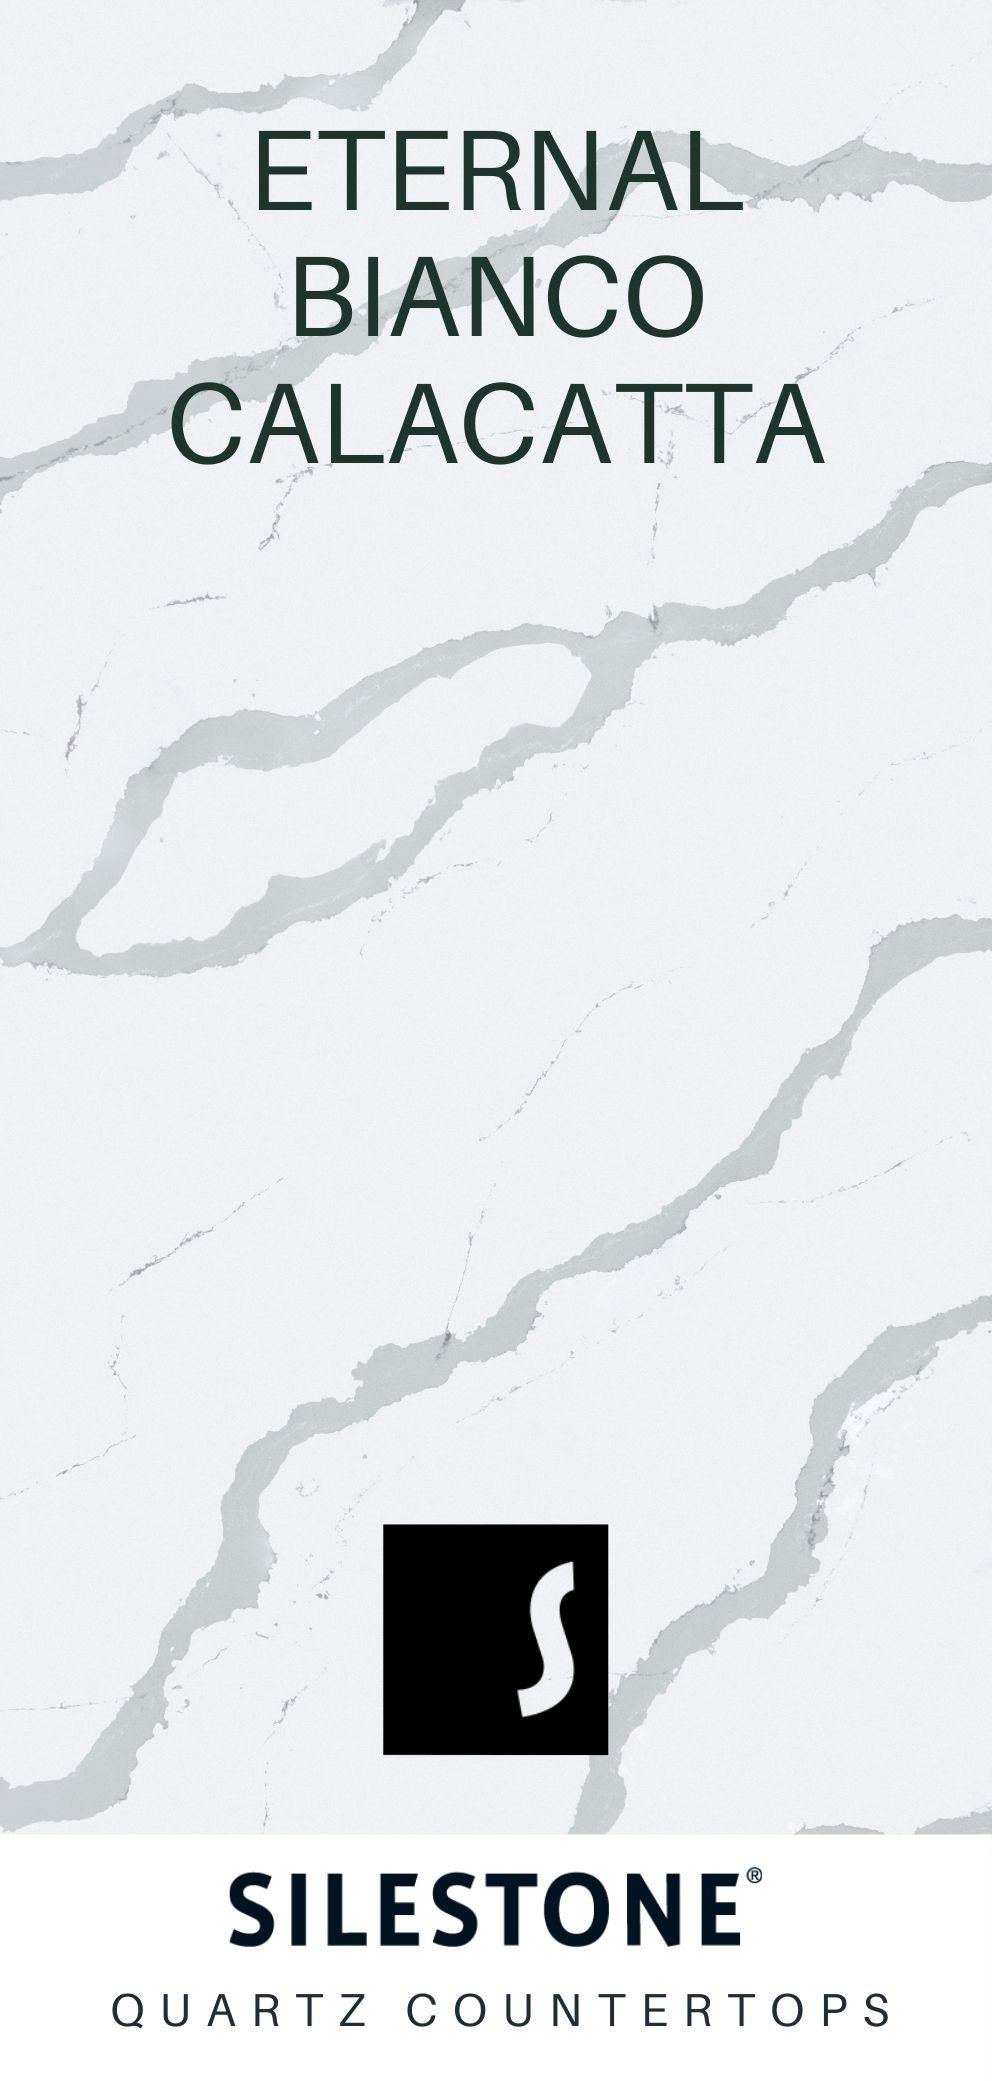 Silestone Quartz Countertops Eternal Bianco Calacatta